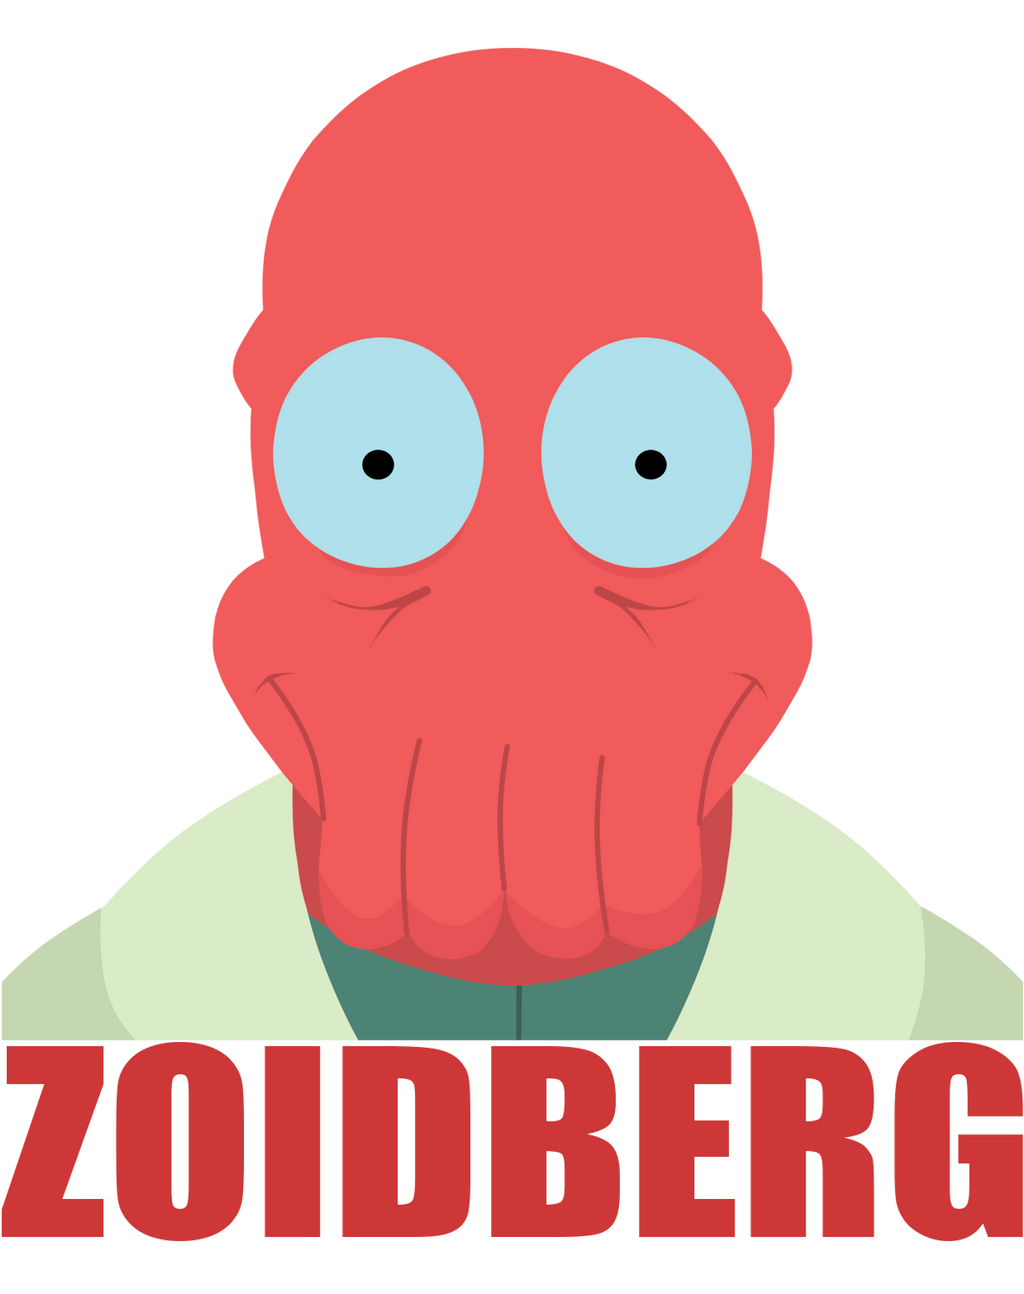 Zoidberg - Vector by Jhnrq on DeviantArt